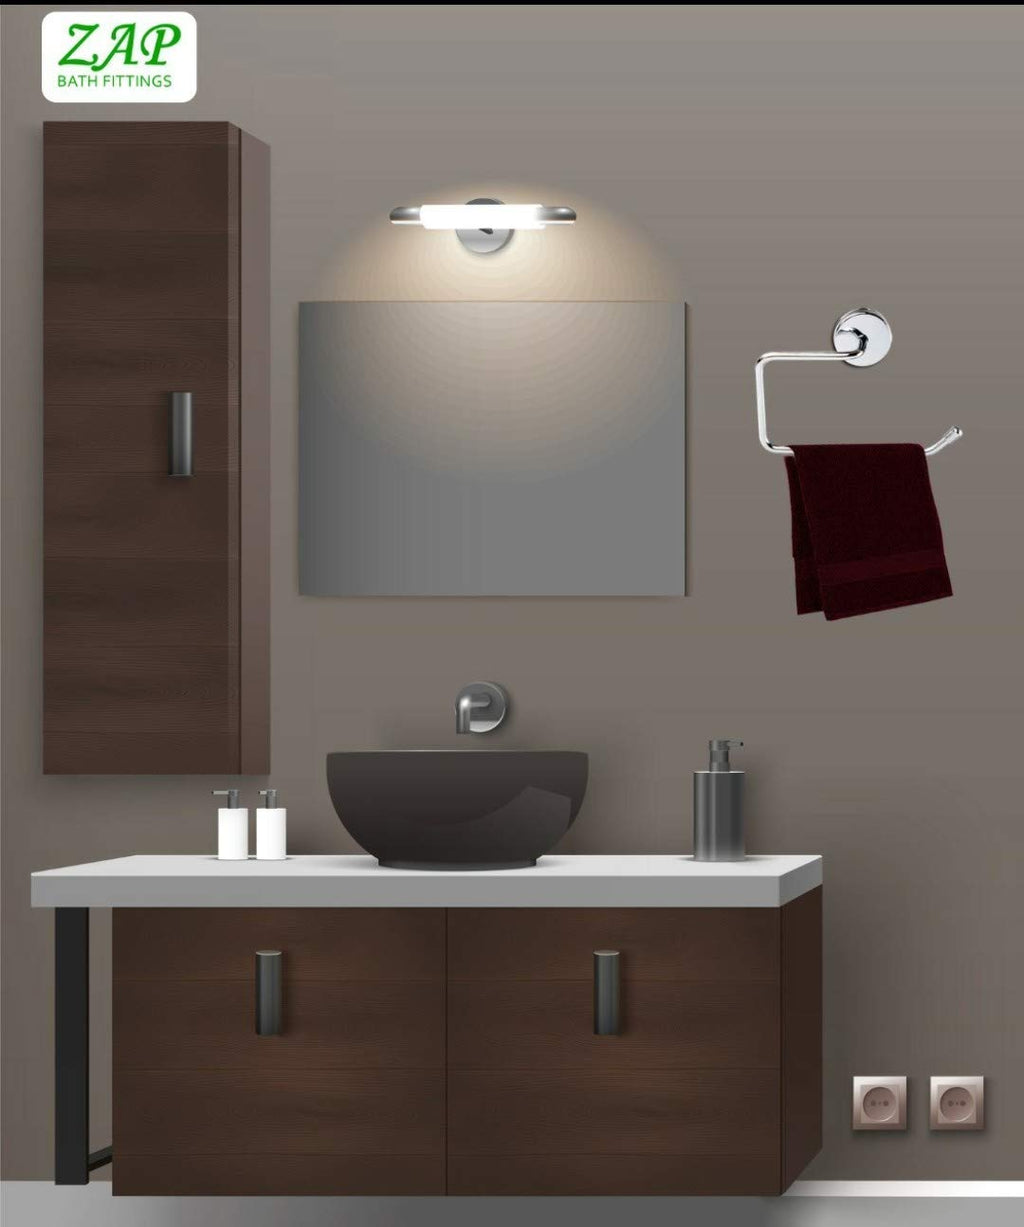 Ultra Rust Free Stainless Steel 304 Towel Ring for Bathroom Towel Holder Napkin Hanger for Kitchen (7)